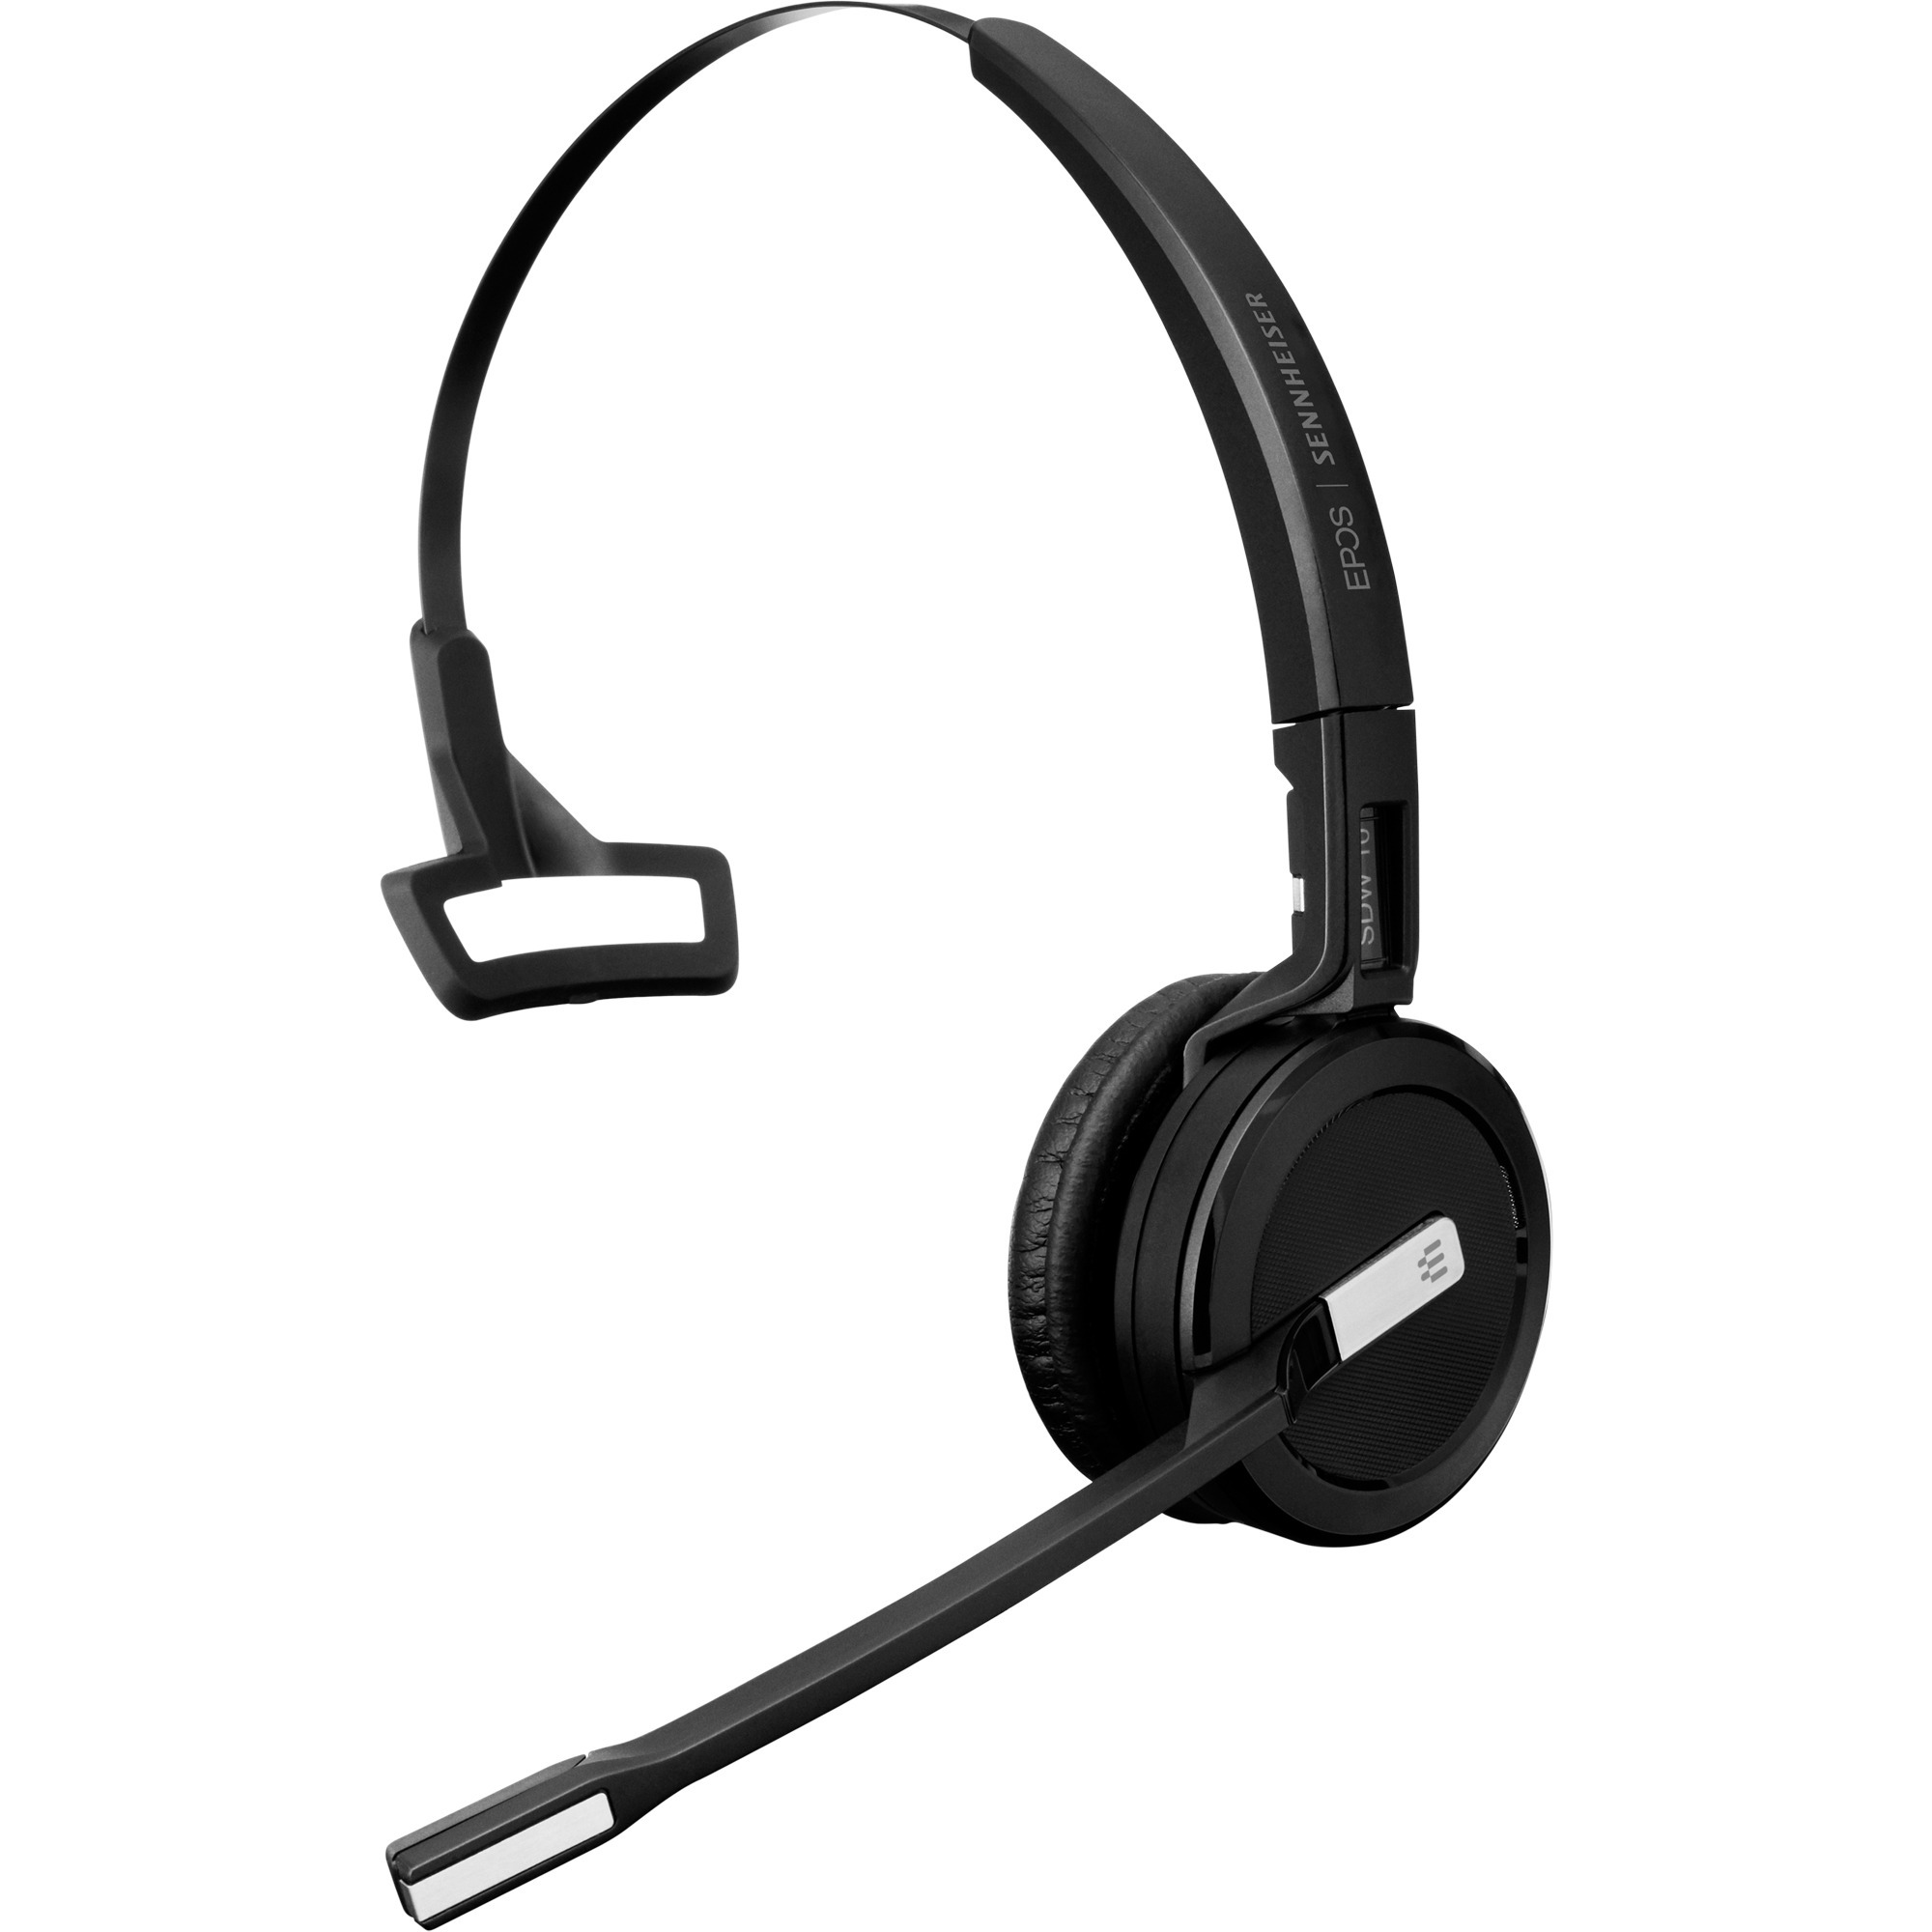 Image of Alternate - IMPACT SDW 5016 - EU, Headset online einkaufen bei Alternate